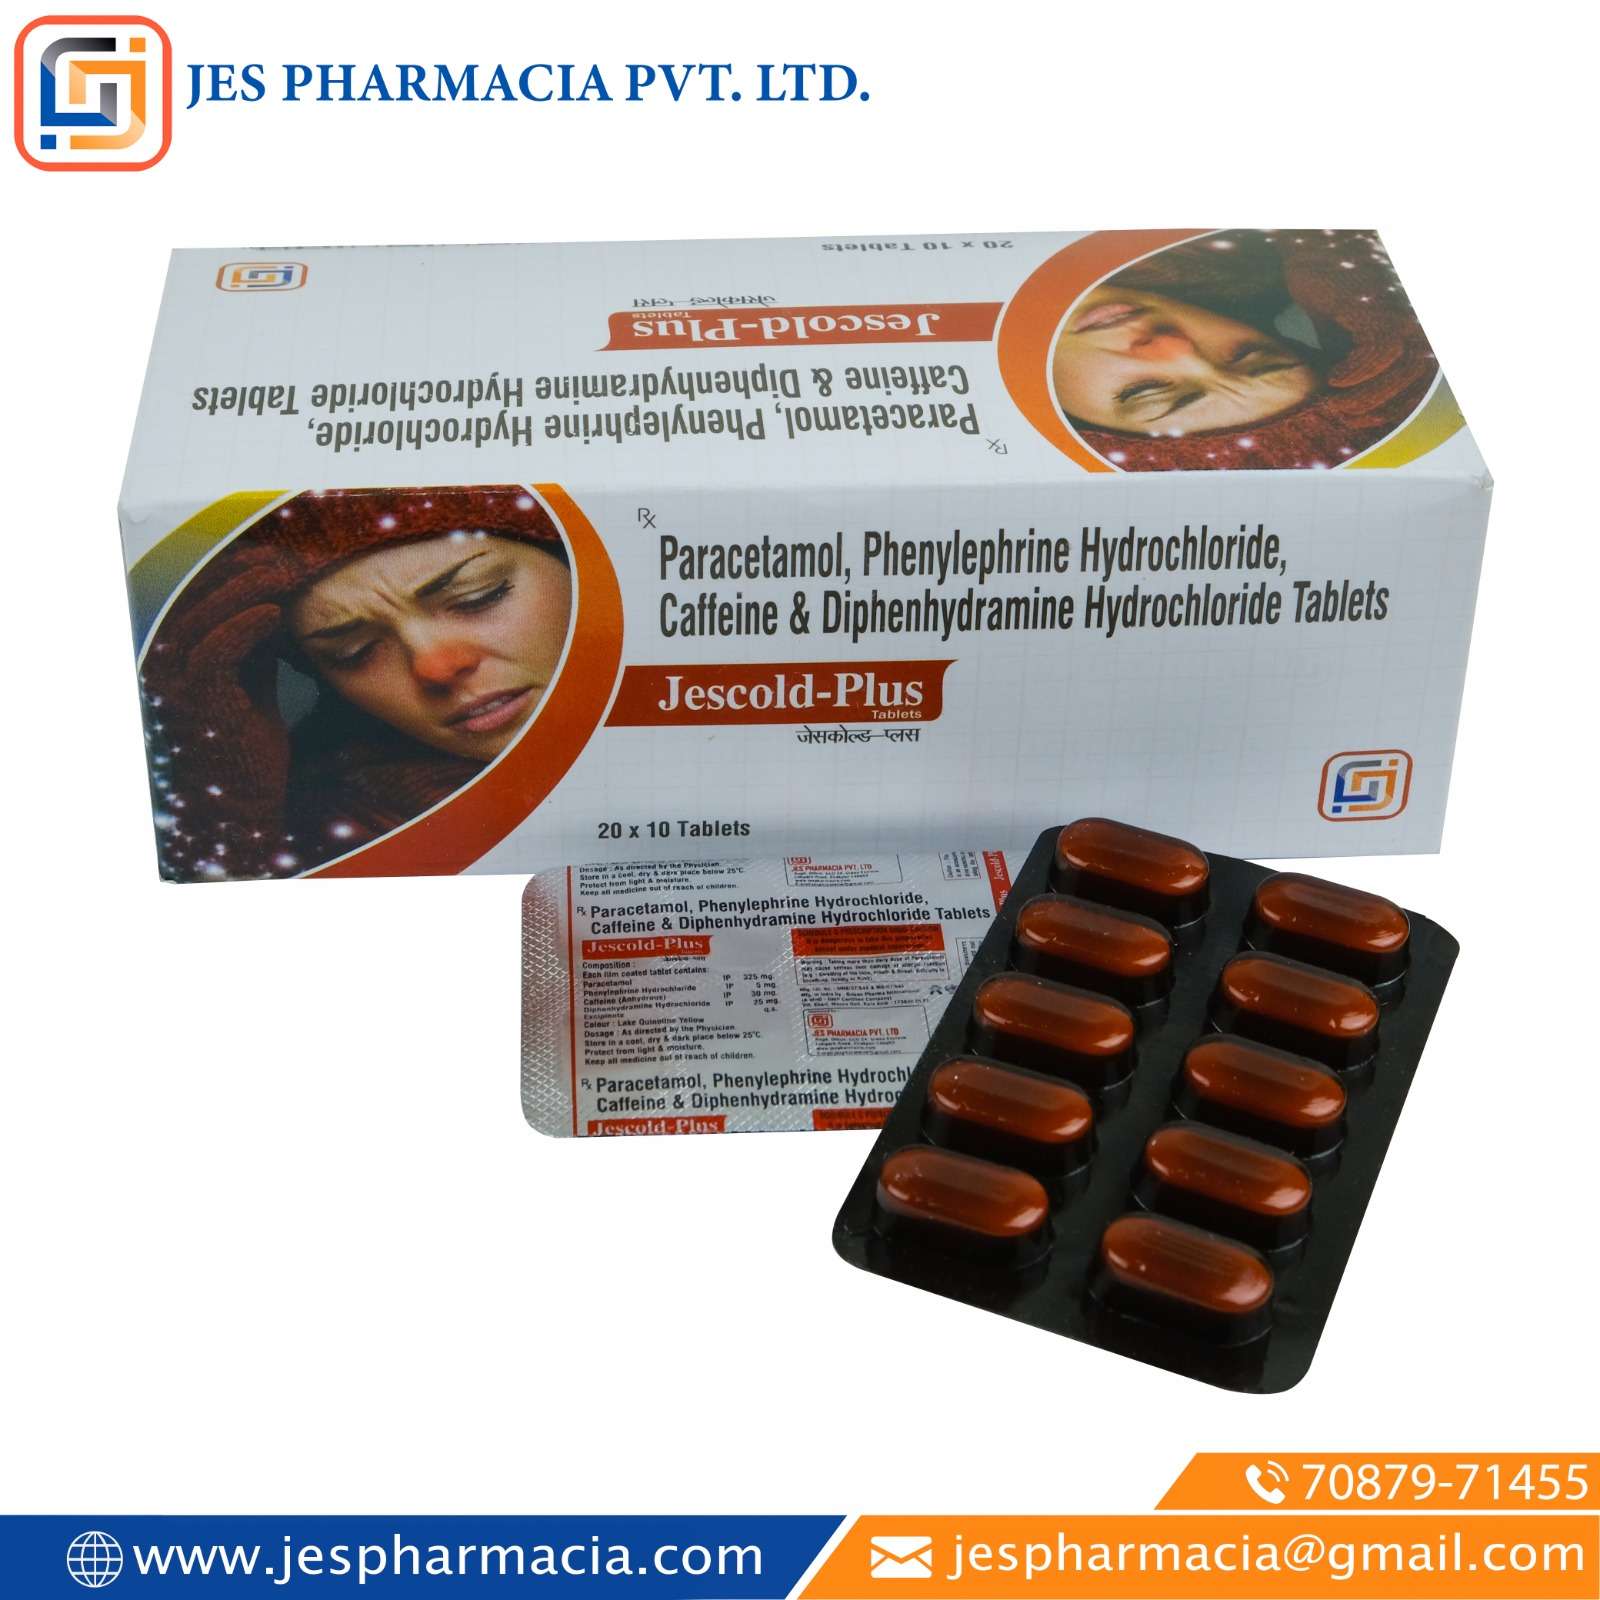 paracetamol 325 mg + phenylephrine hydrochloride 5   mg   + diphenhydramine hydrochloride 25 mg +
caffeine 30 mg    tablet